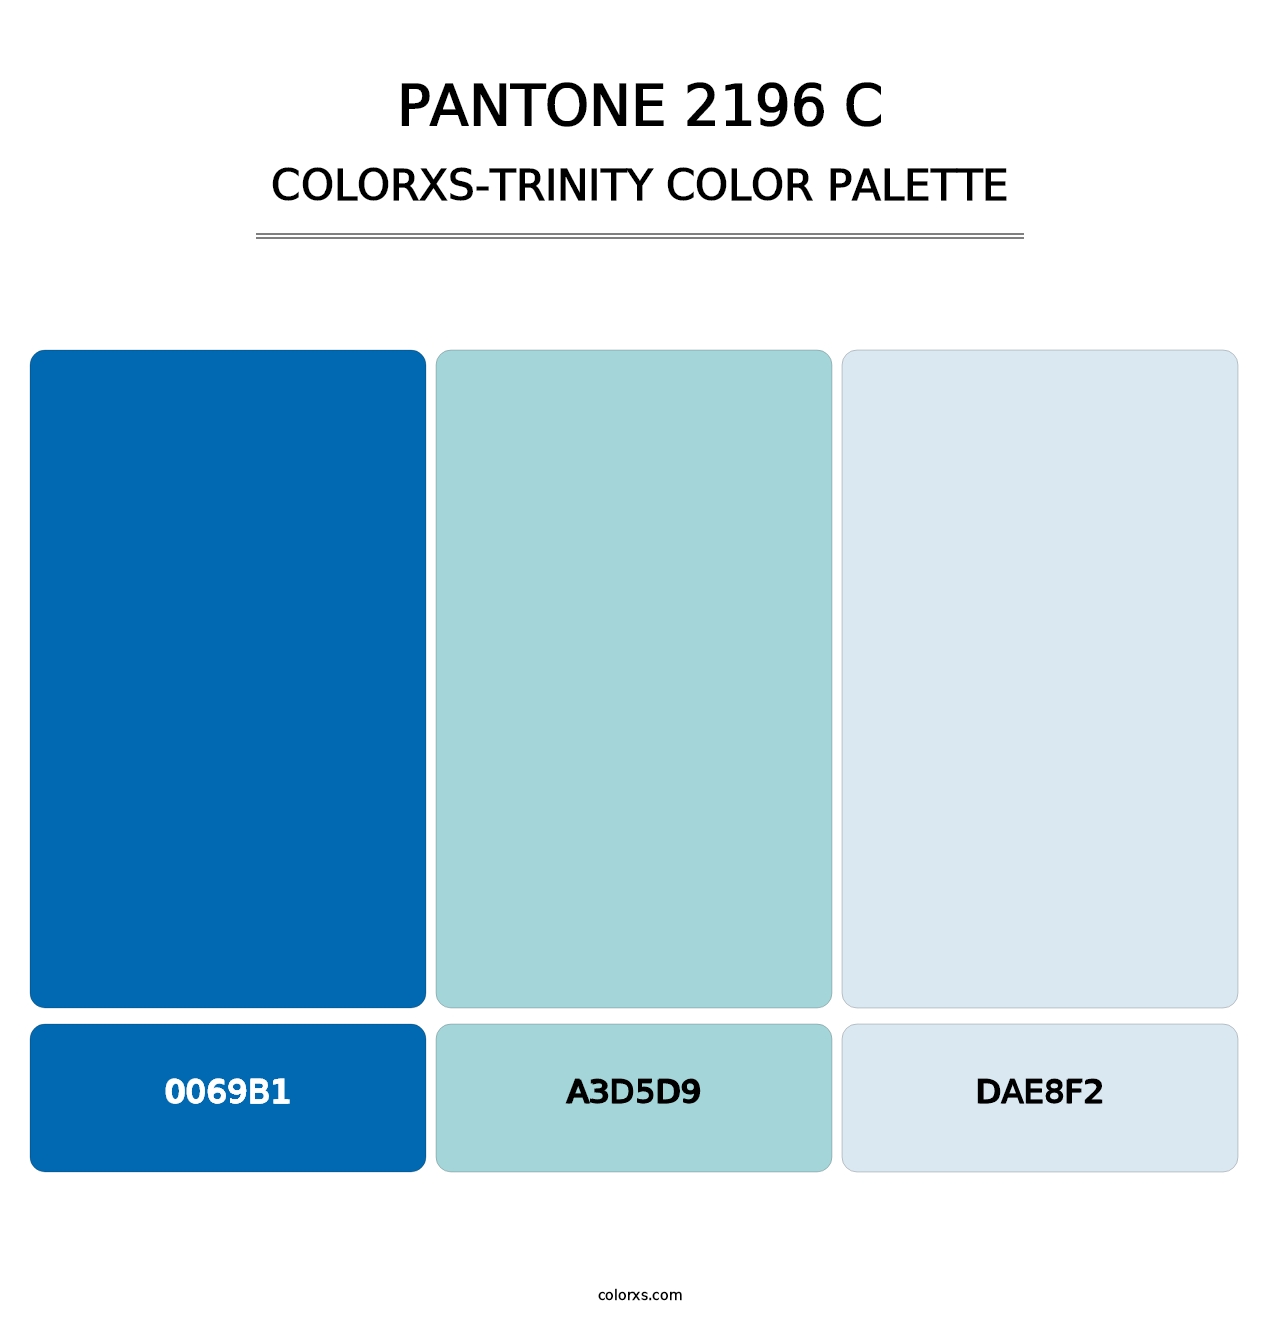 PANTONE 2196 C - Colorxs Trinity Palette